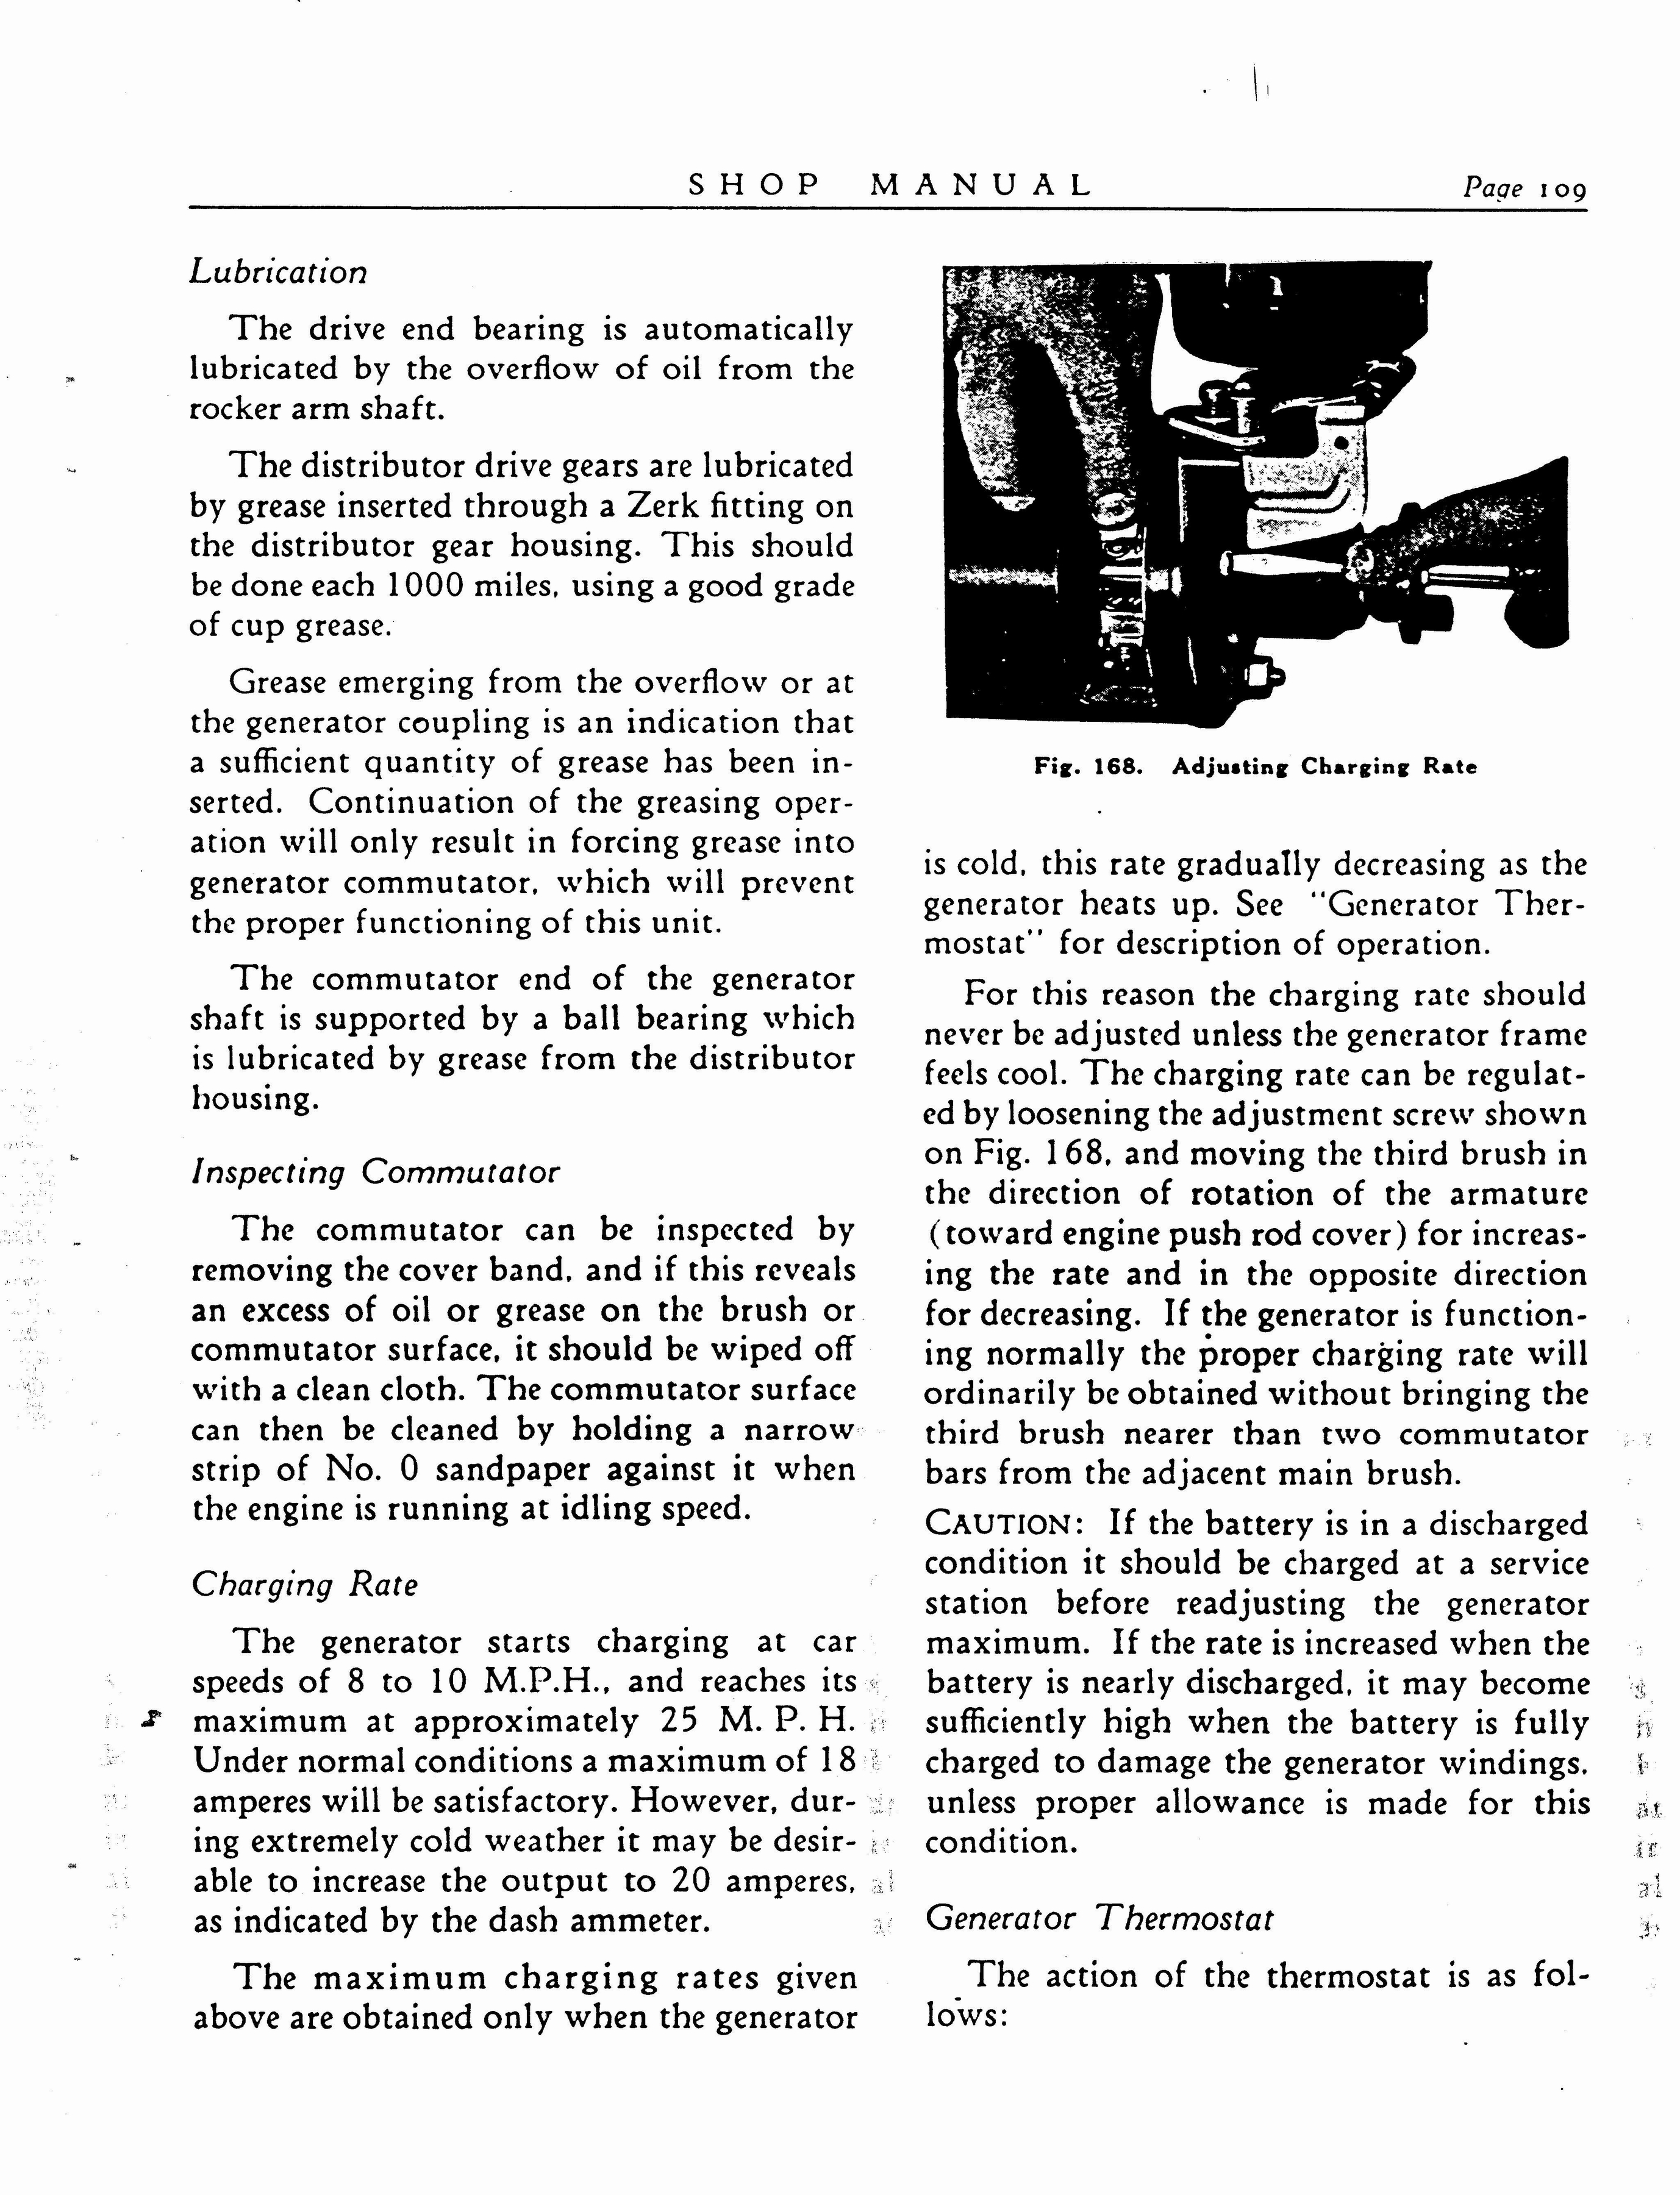 n_1933 Buick Shop Manual_Page_110.jpg